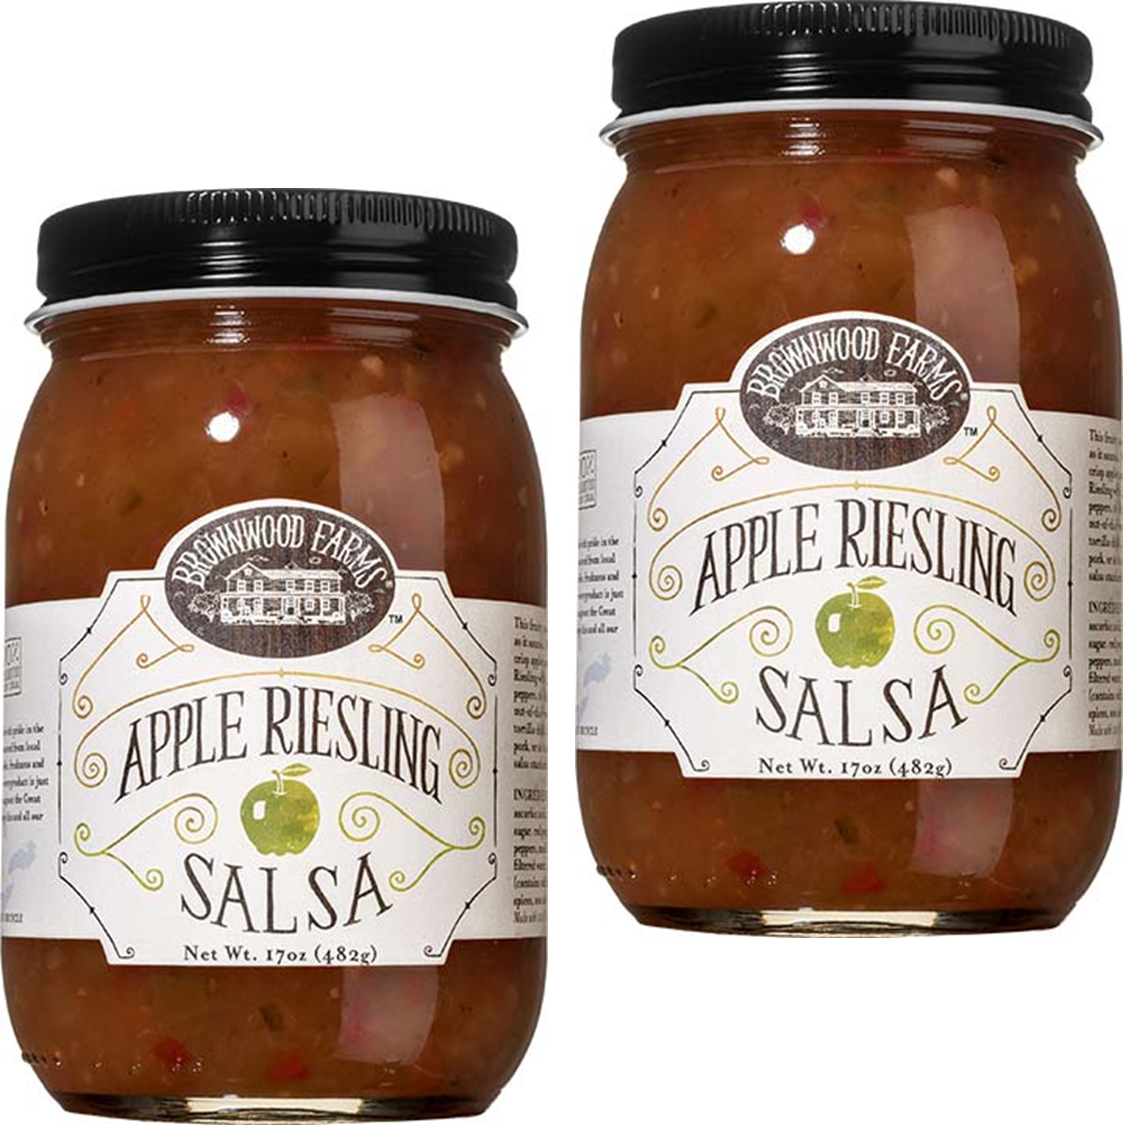 Primary image for Brownwood Farms Apple Riesling Salsa, 2-Pack 17 oz. Jars